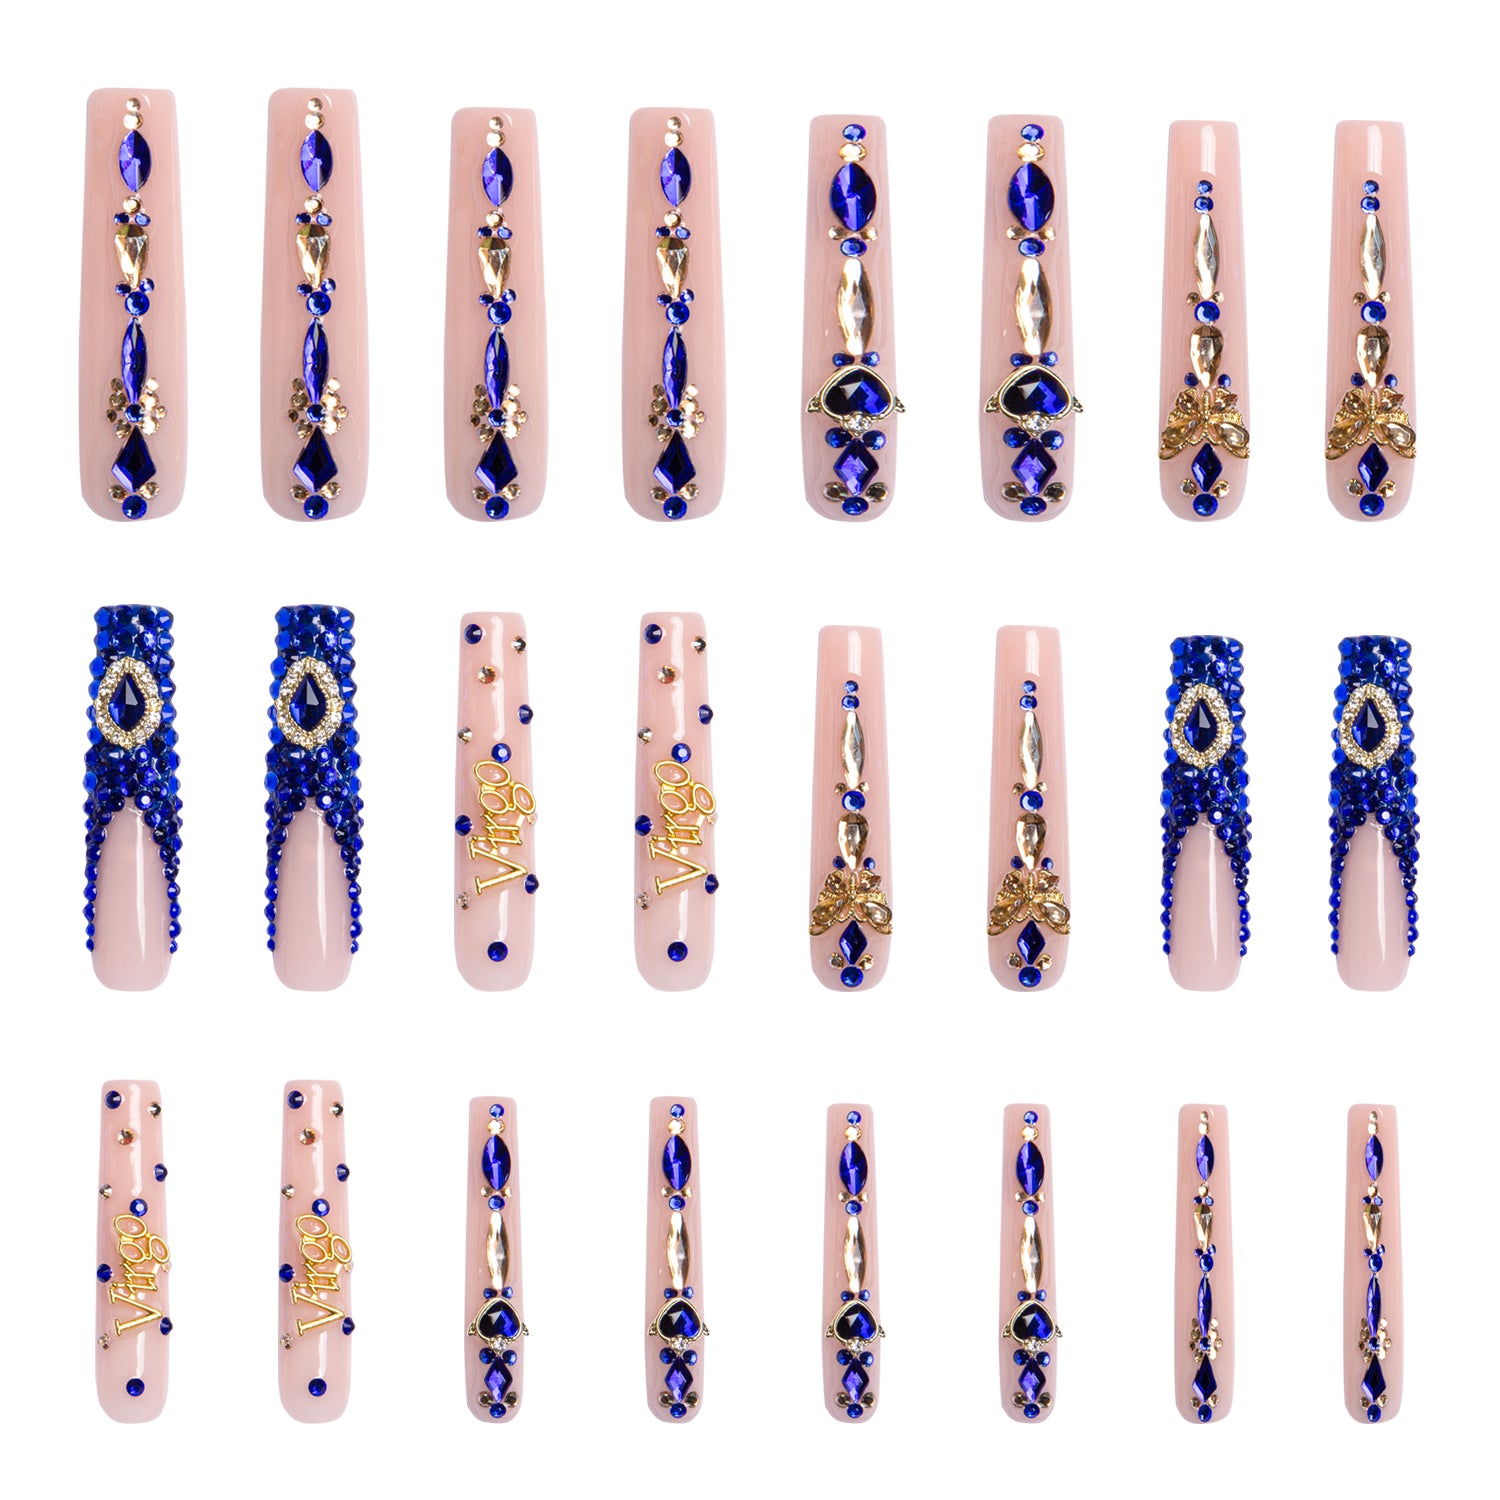 Virgo blue french tip nails 24Pcs H164